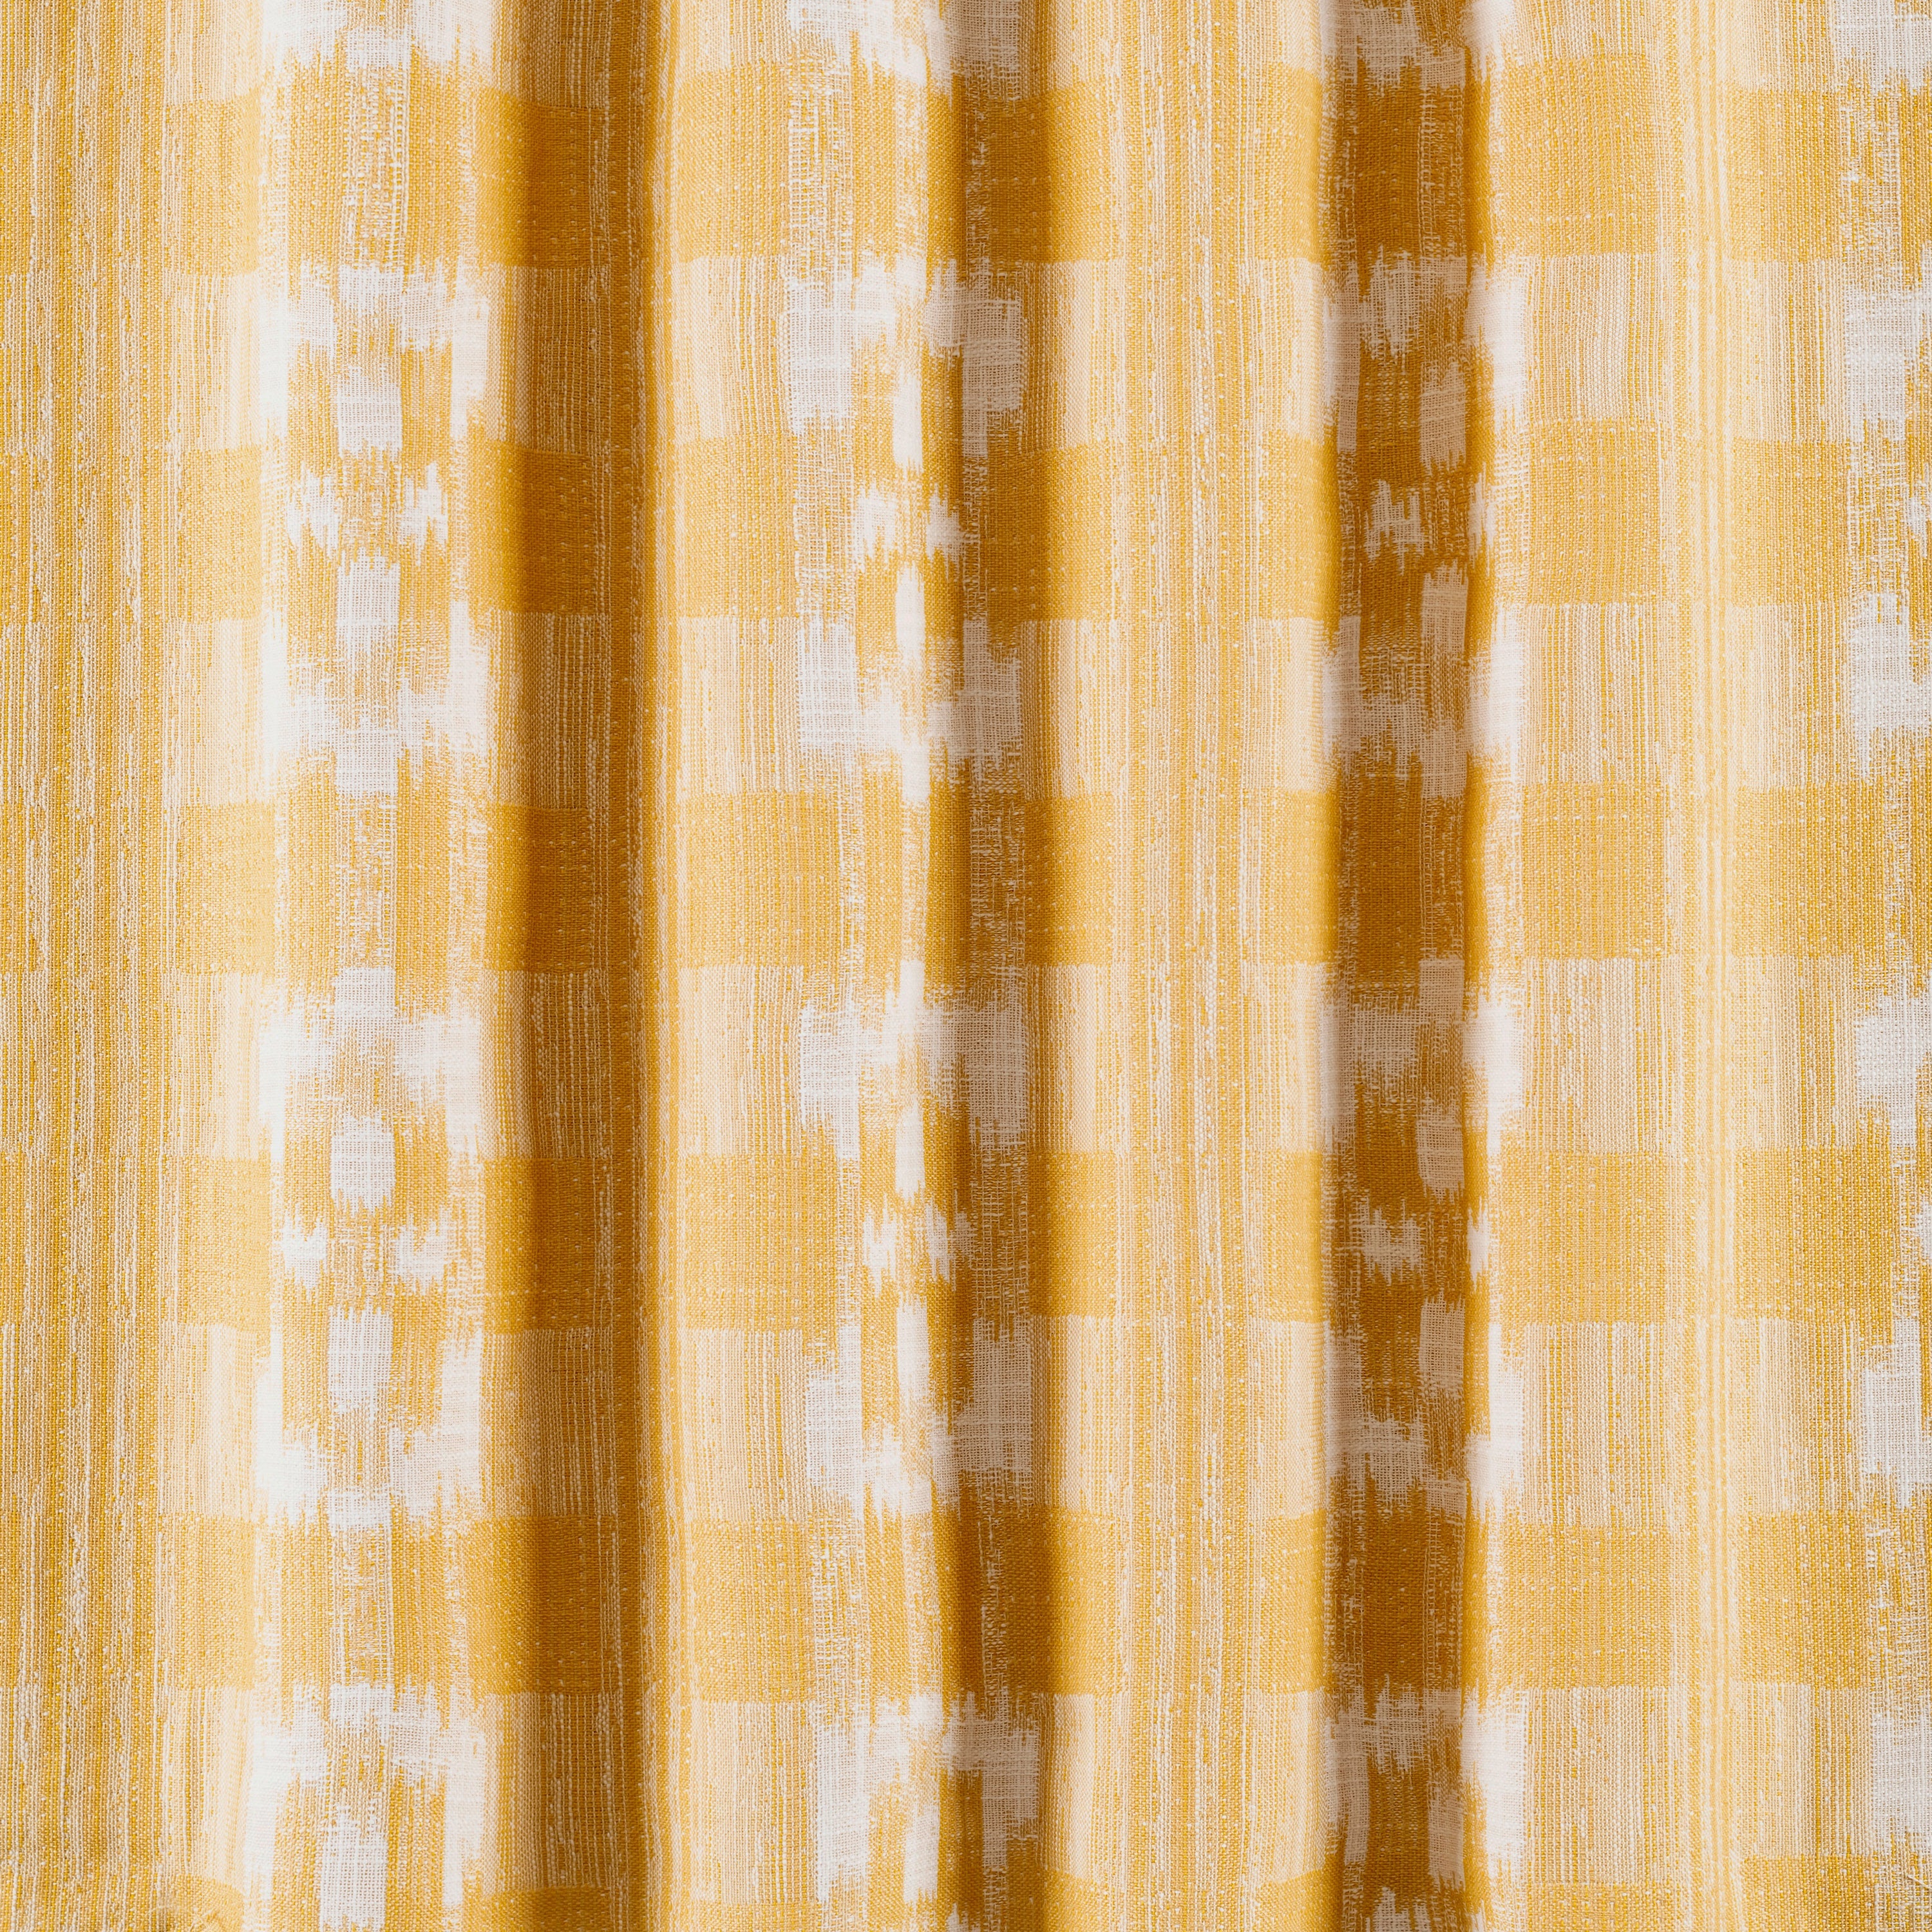 Mahalo Performance Fabric Sample